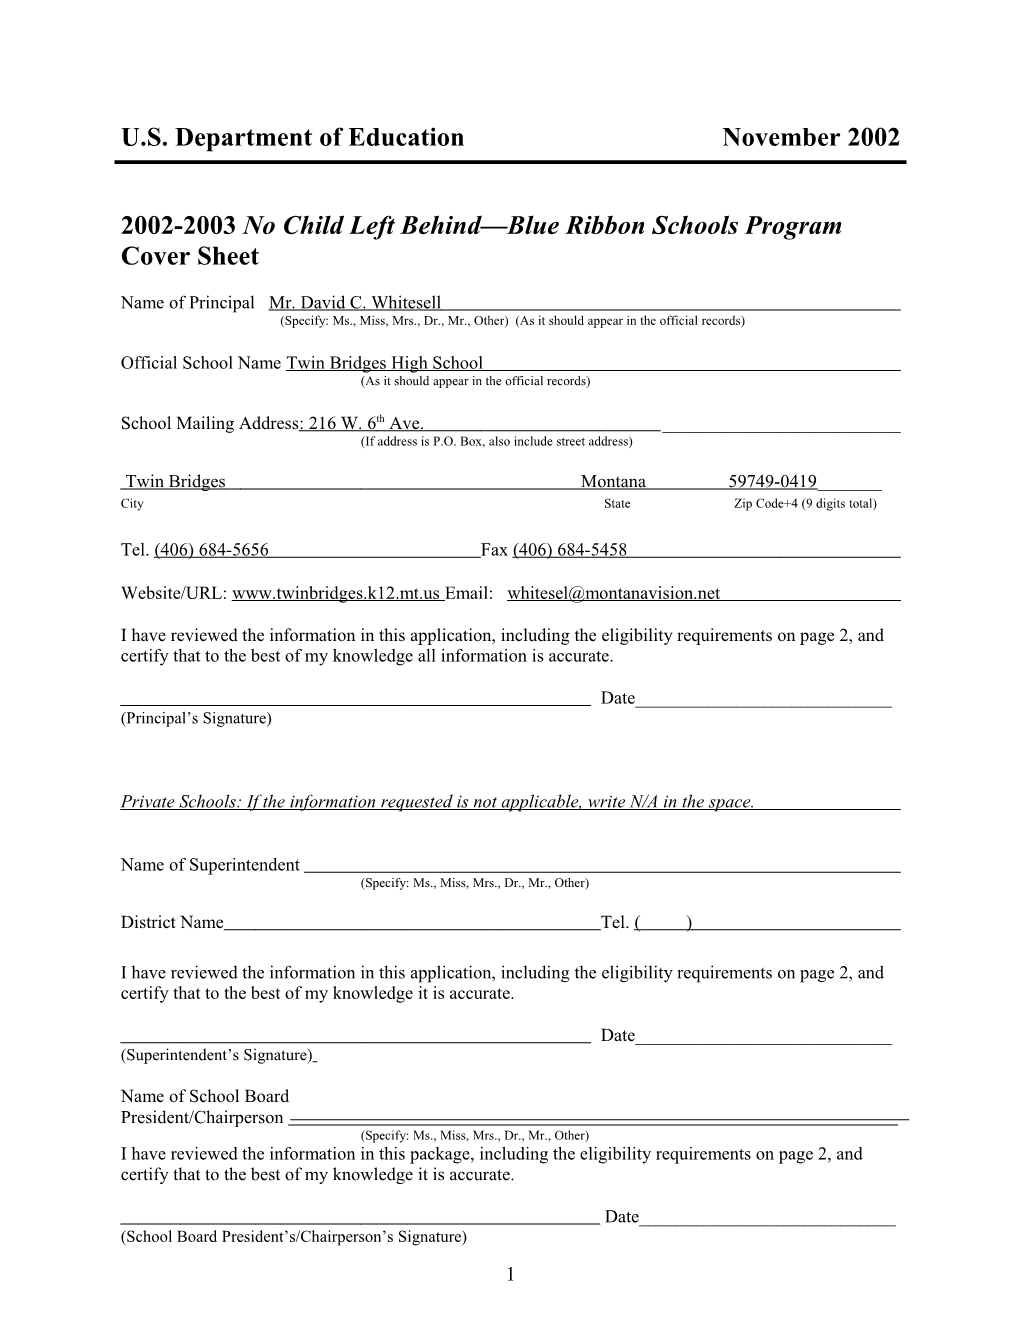 Twin Bridges High School 2003 No Child Left Behind-Blue Ribbon School (Msword)